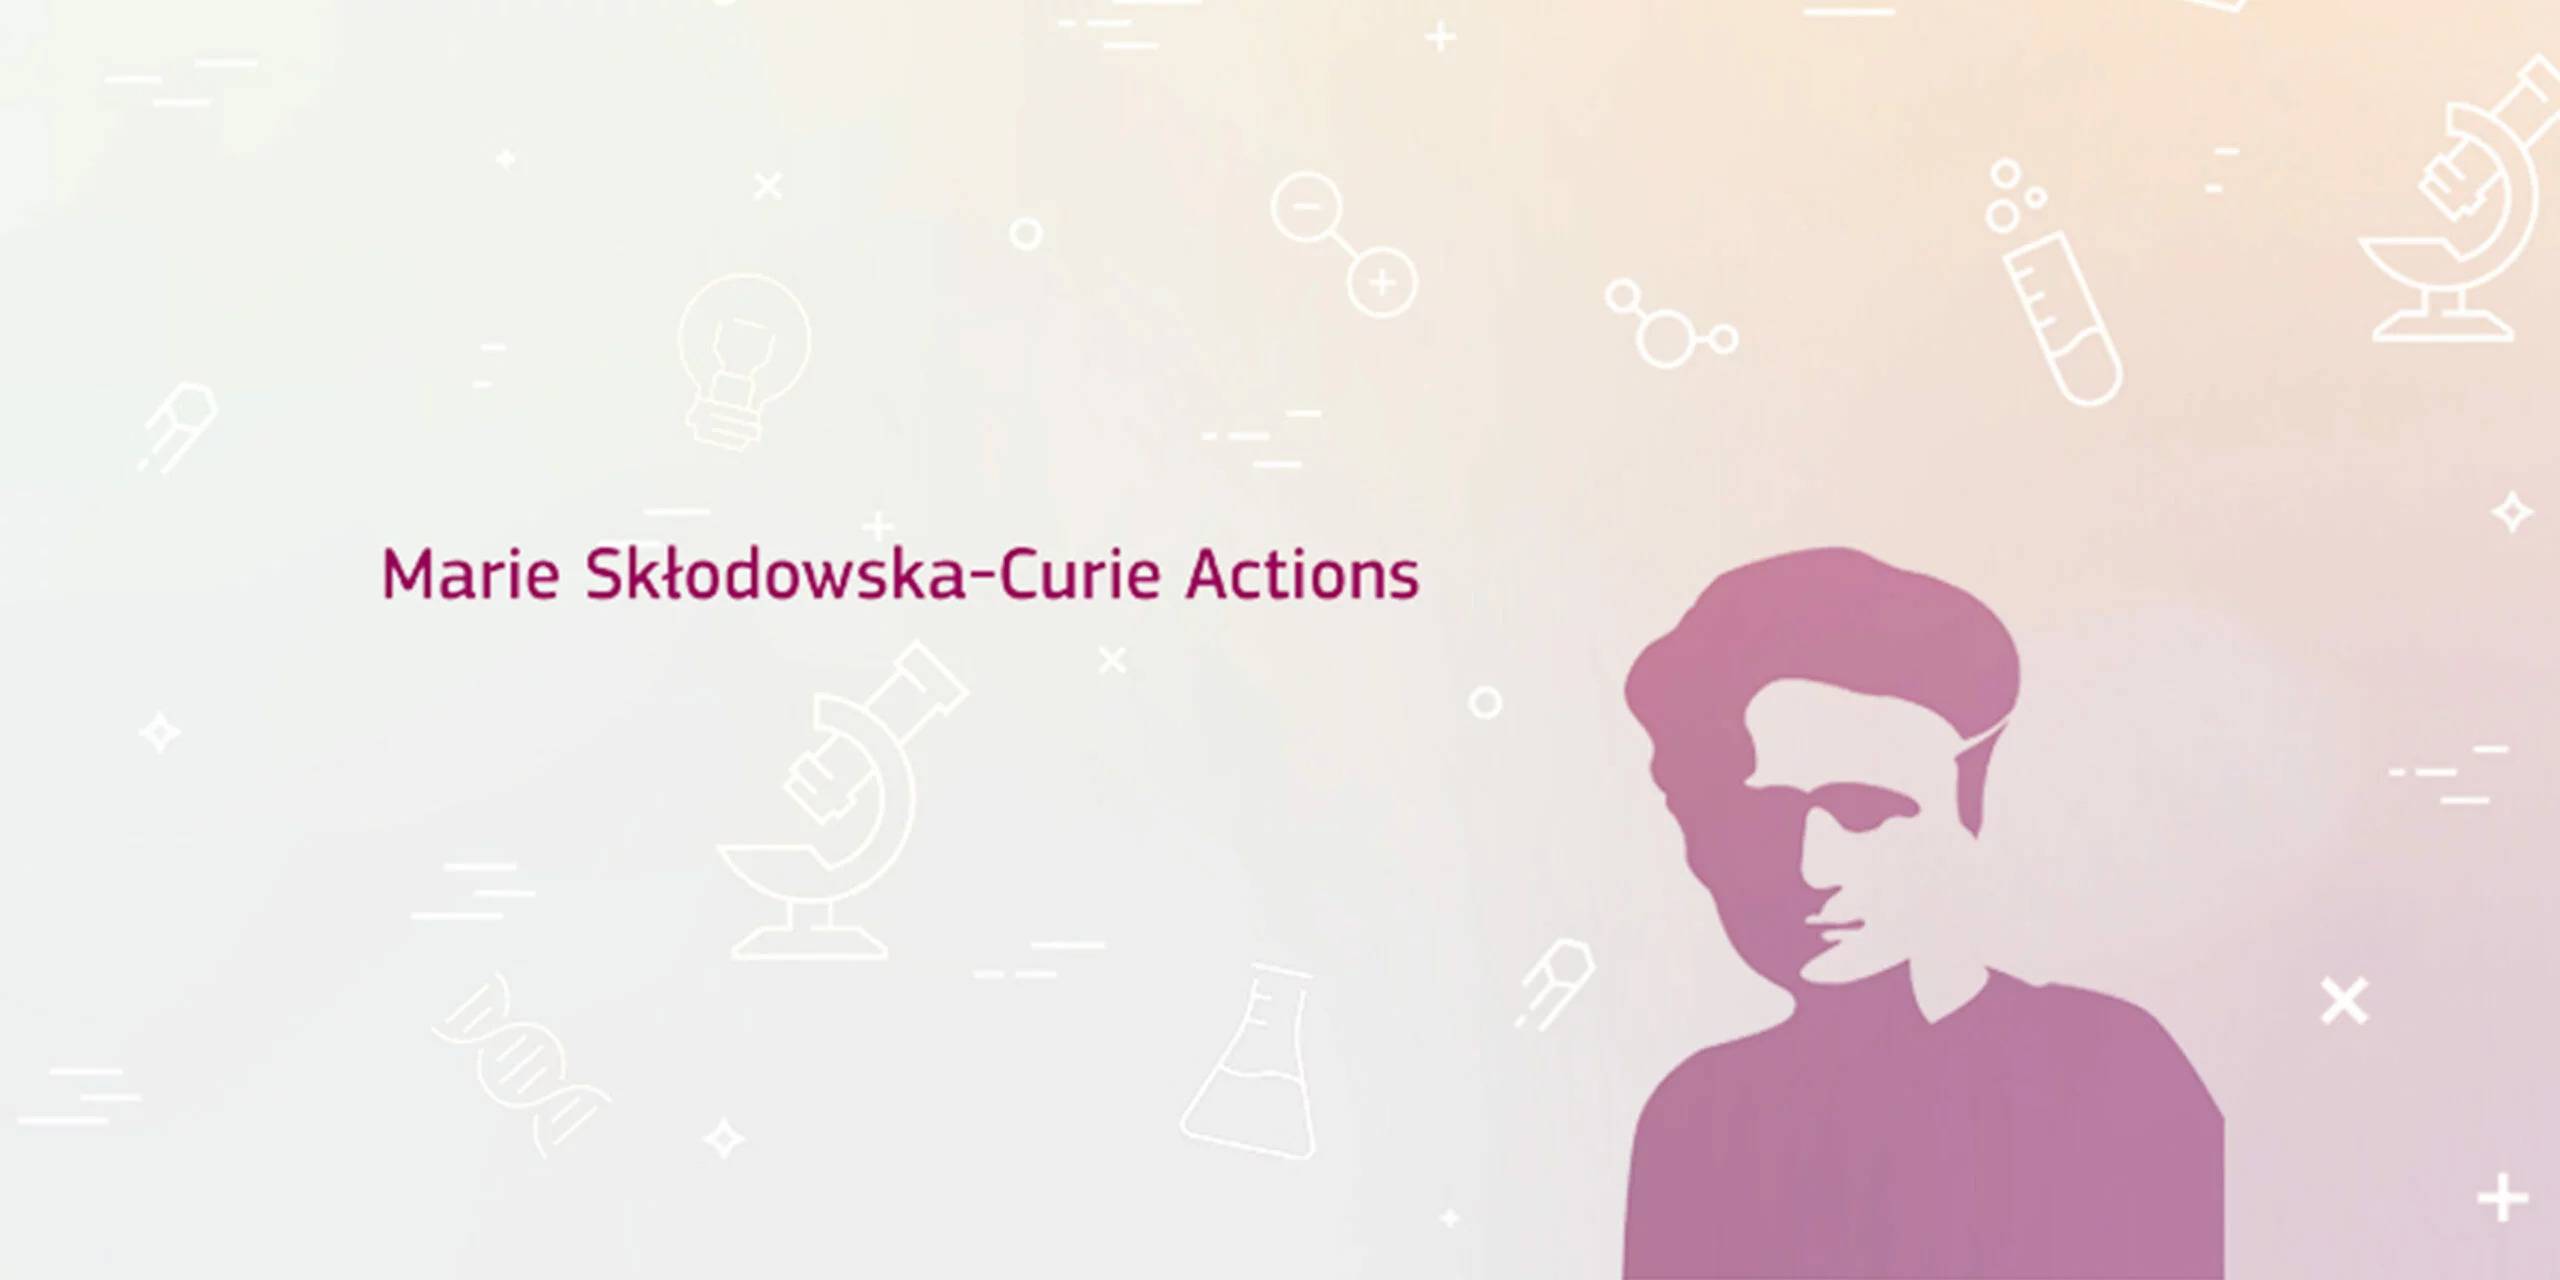 Iscte will coordinate a Marie Skłodowska-Curie doctoral network.